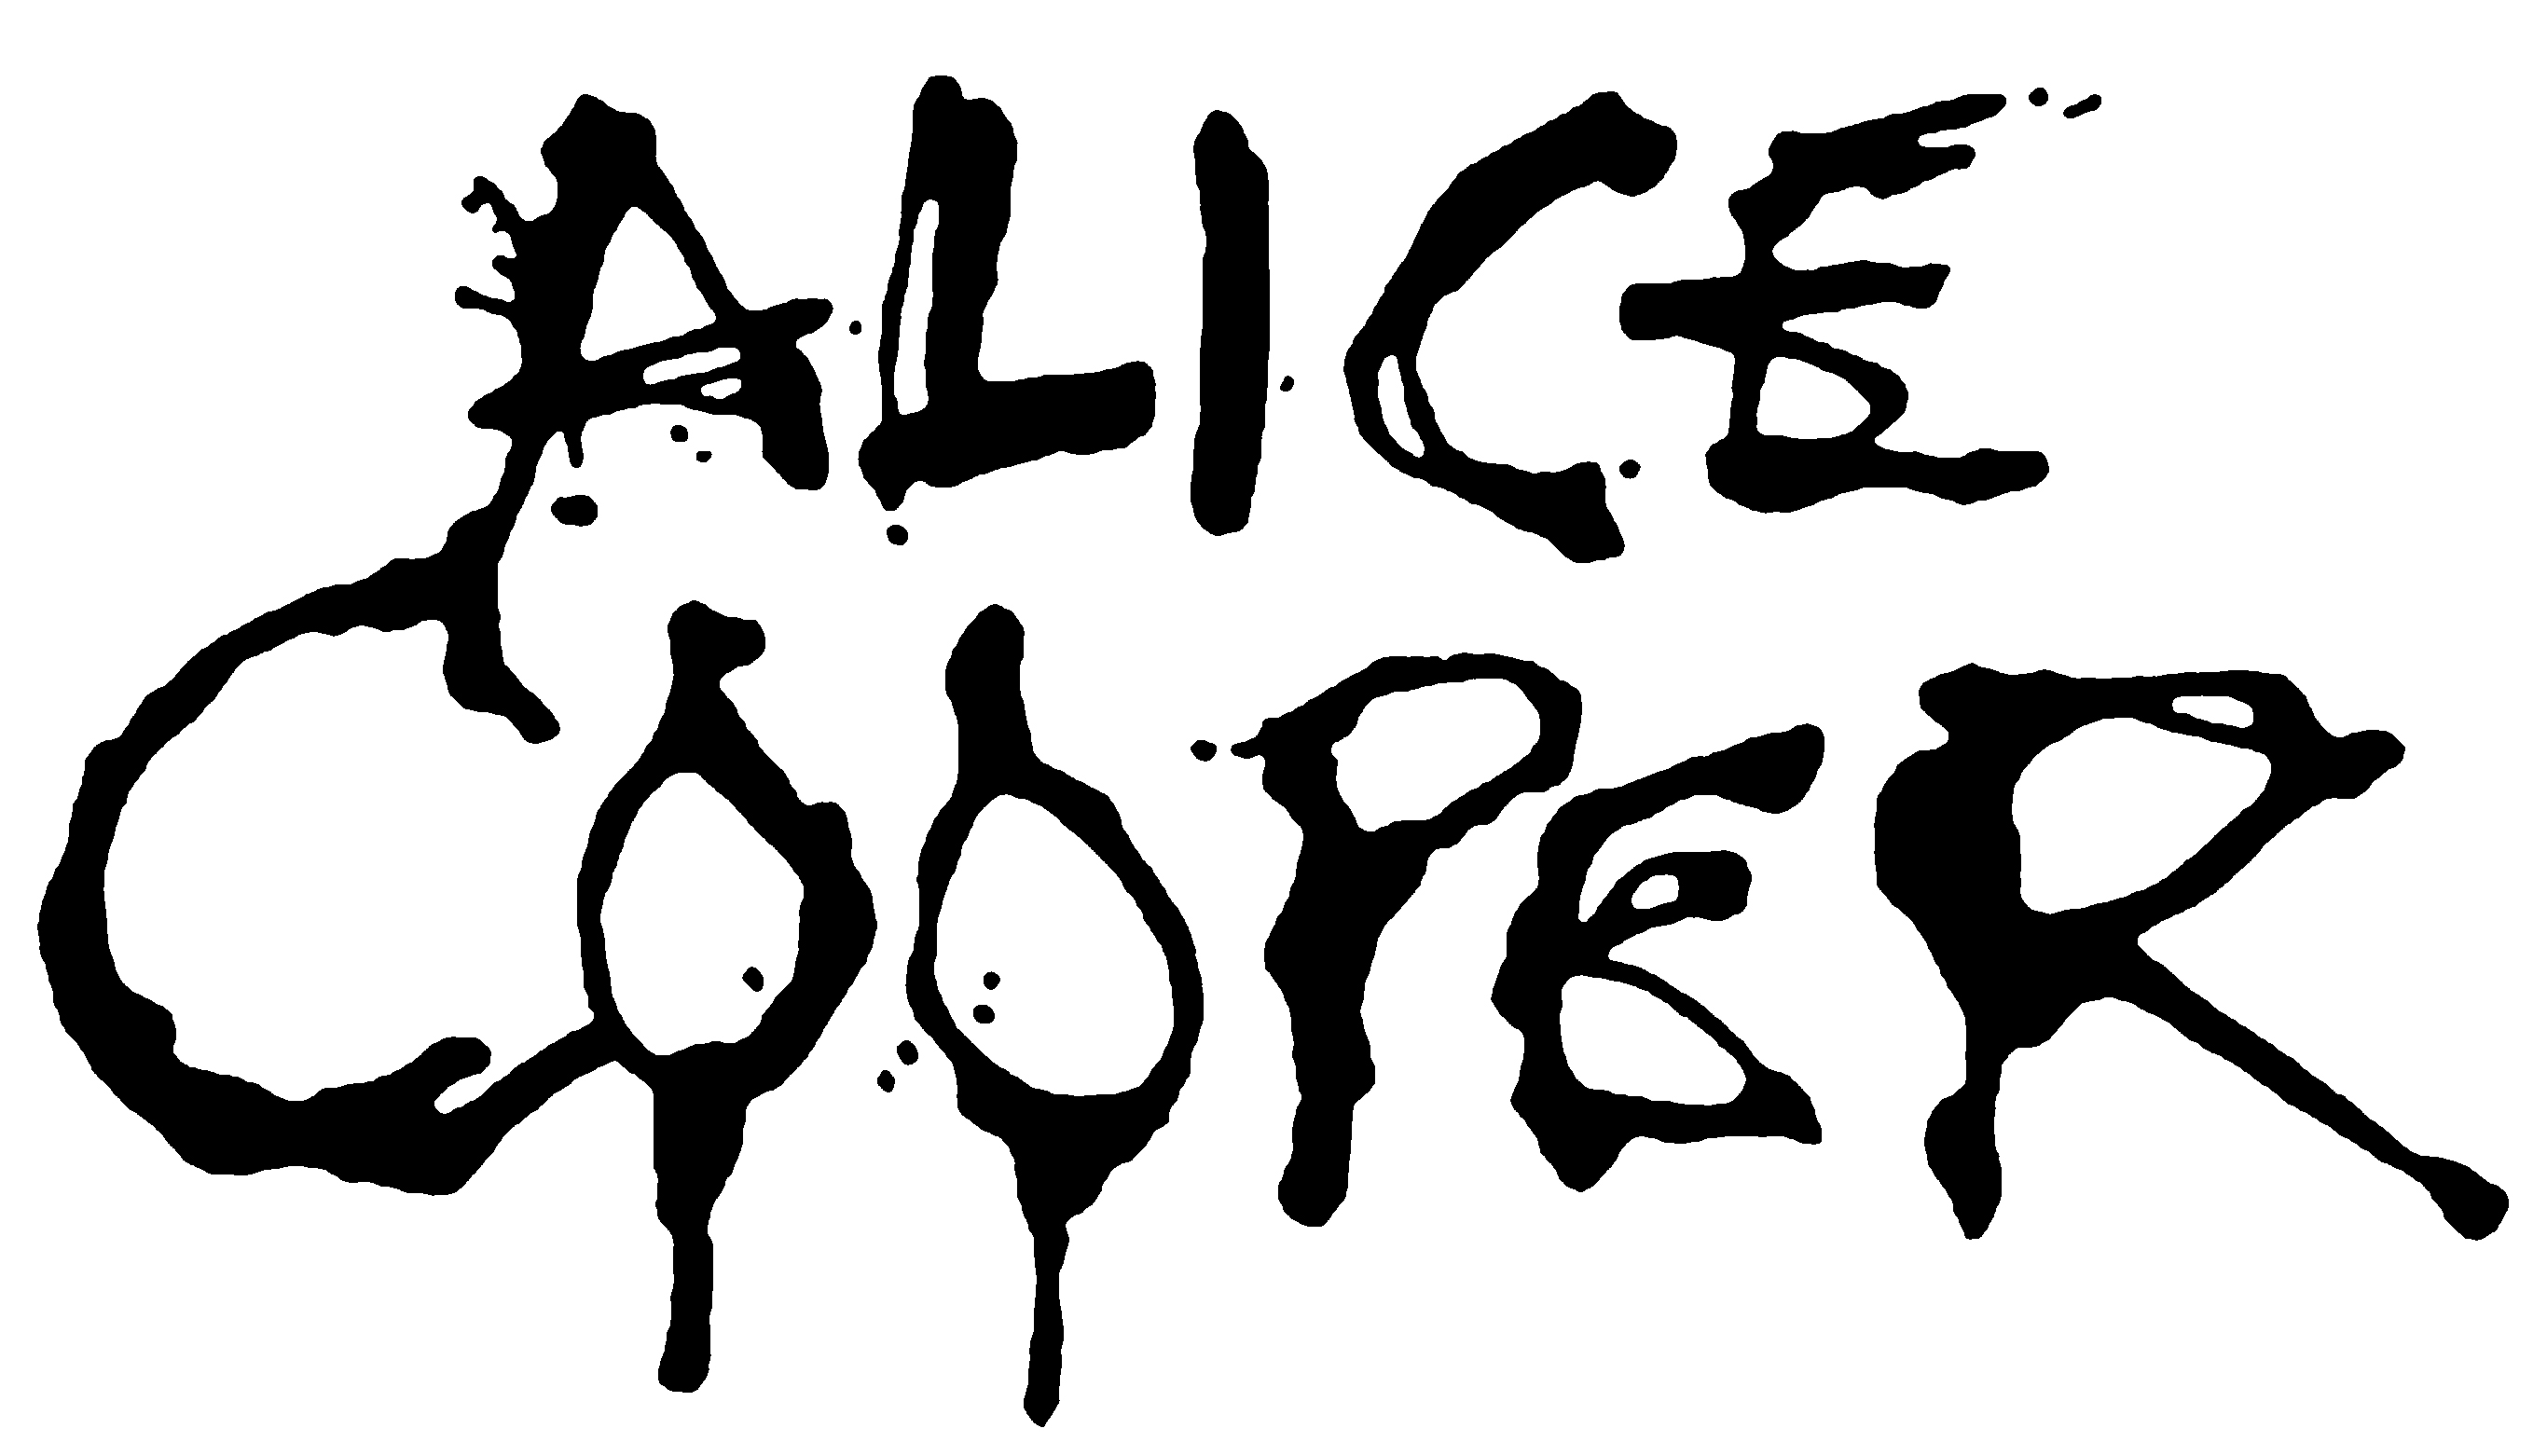 Alice Cooper Announces November 2019 Headline Tour Dates